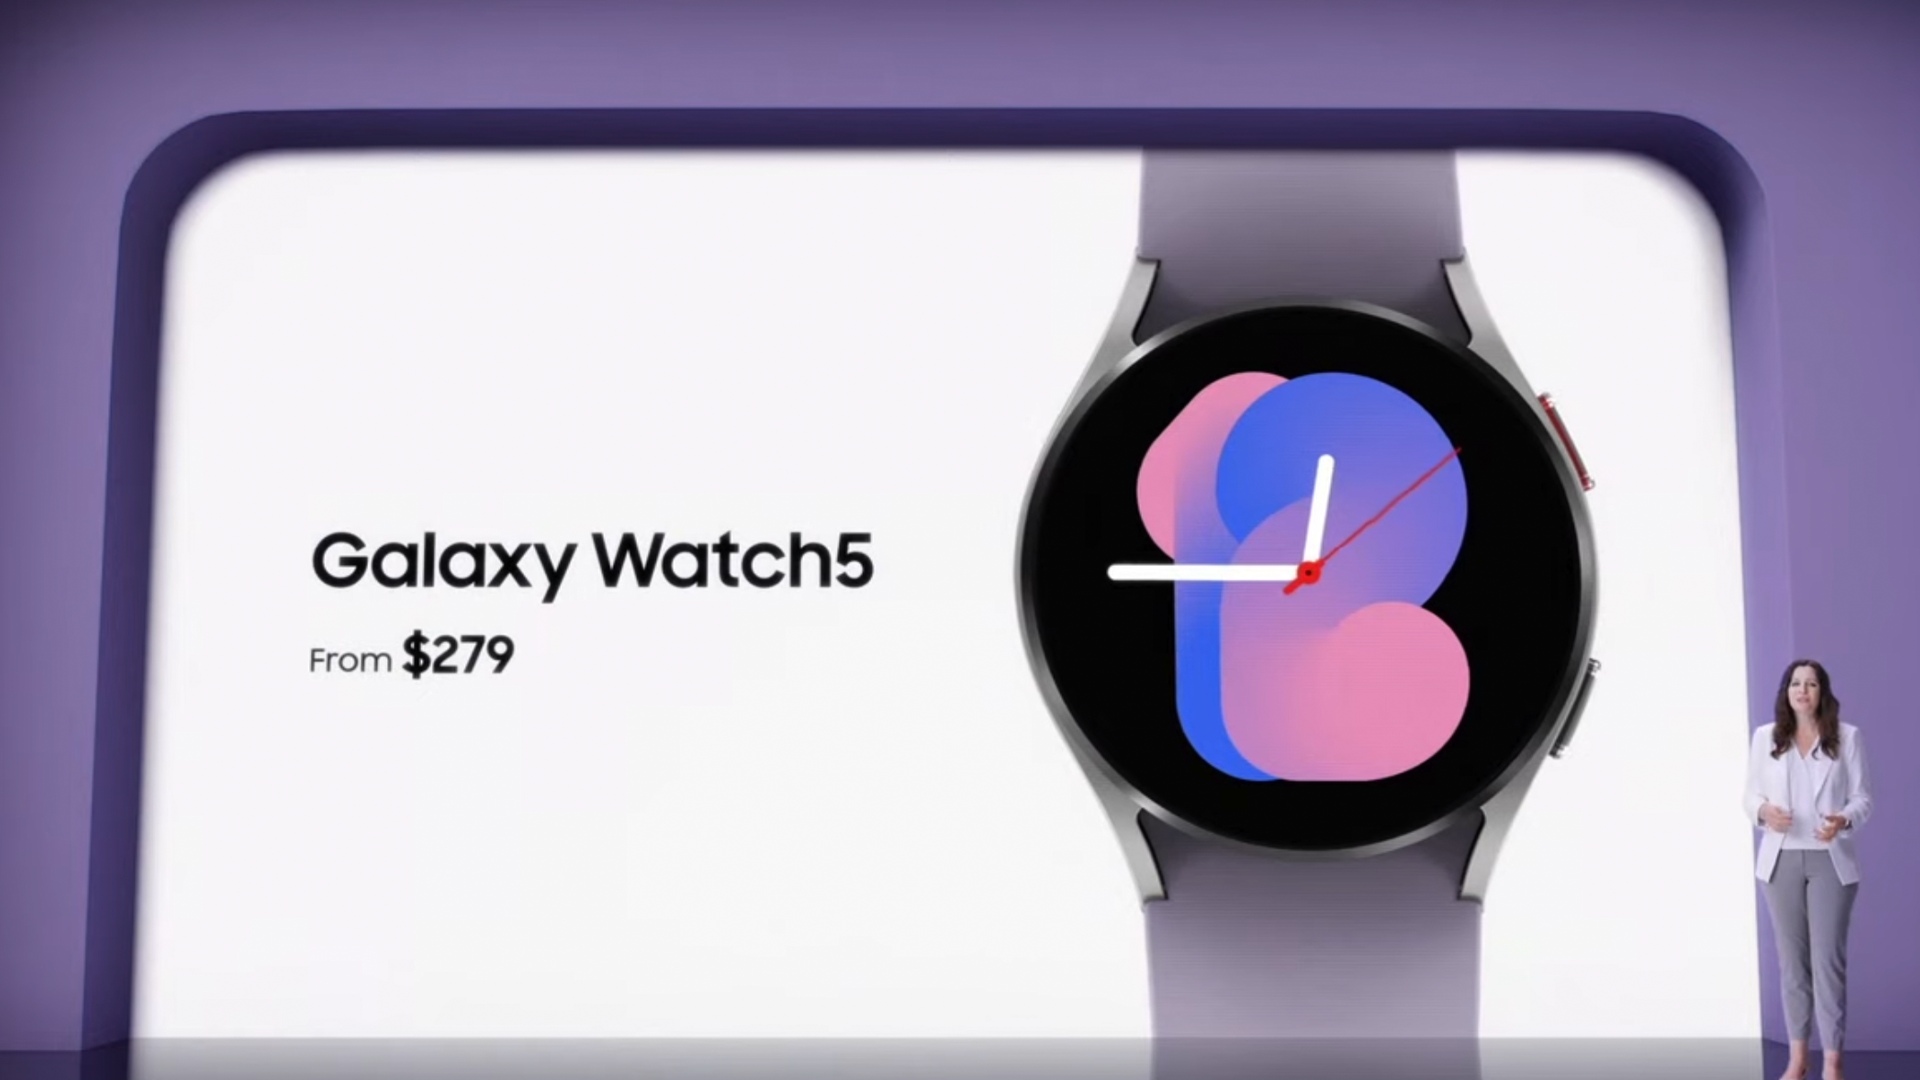 The Samsung Galaxy Watch 5 starts at $279.